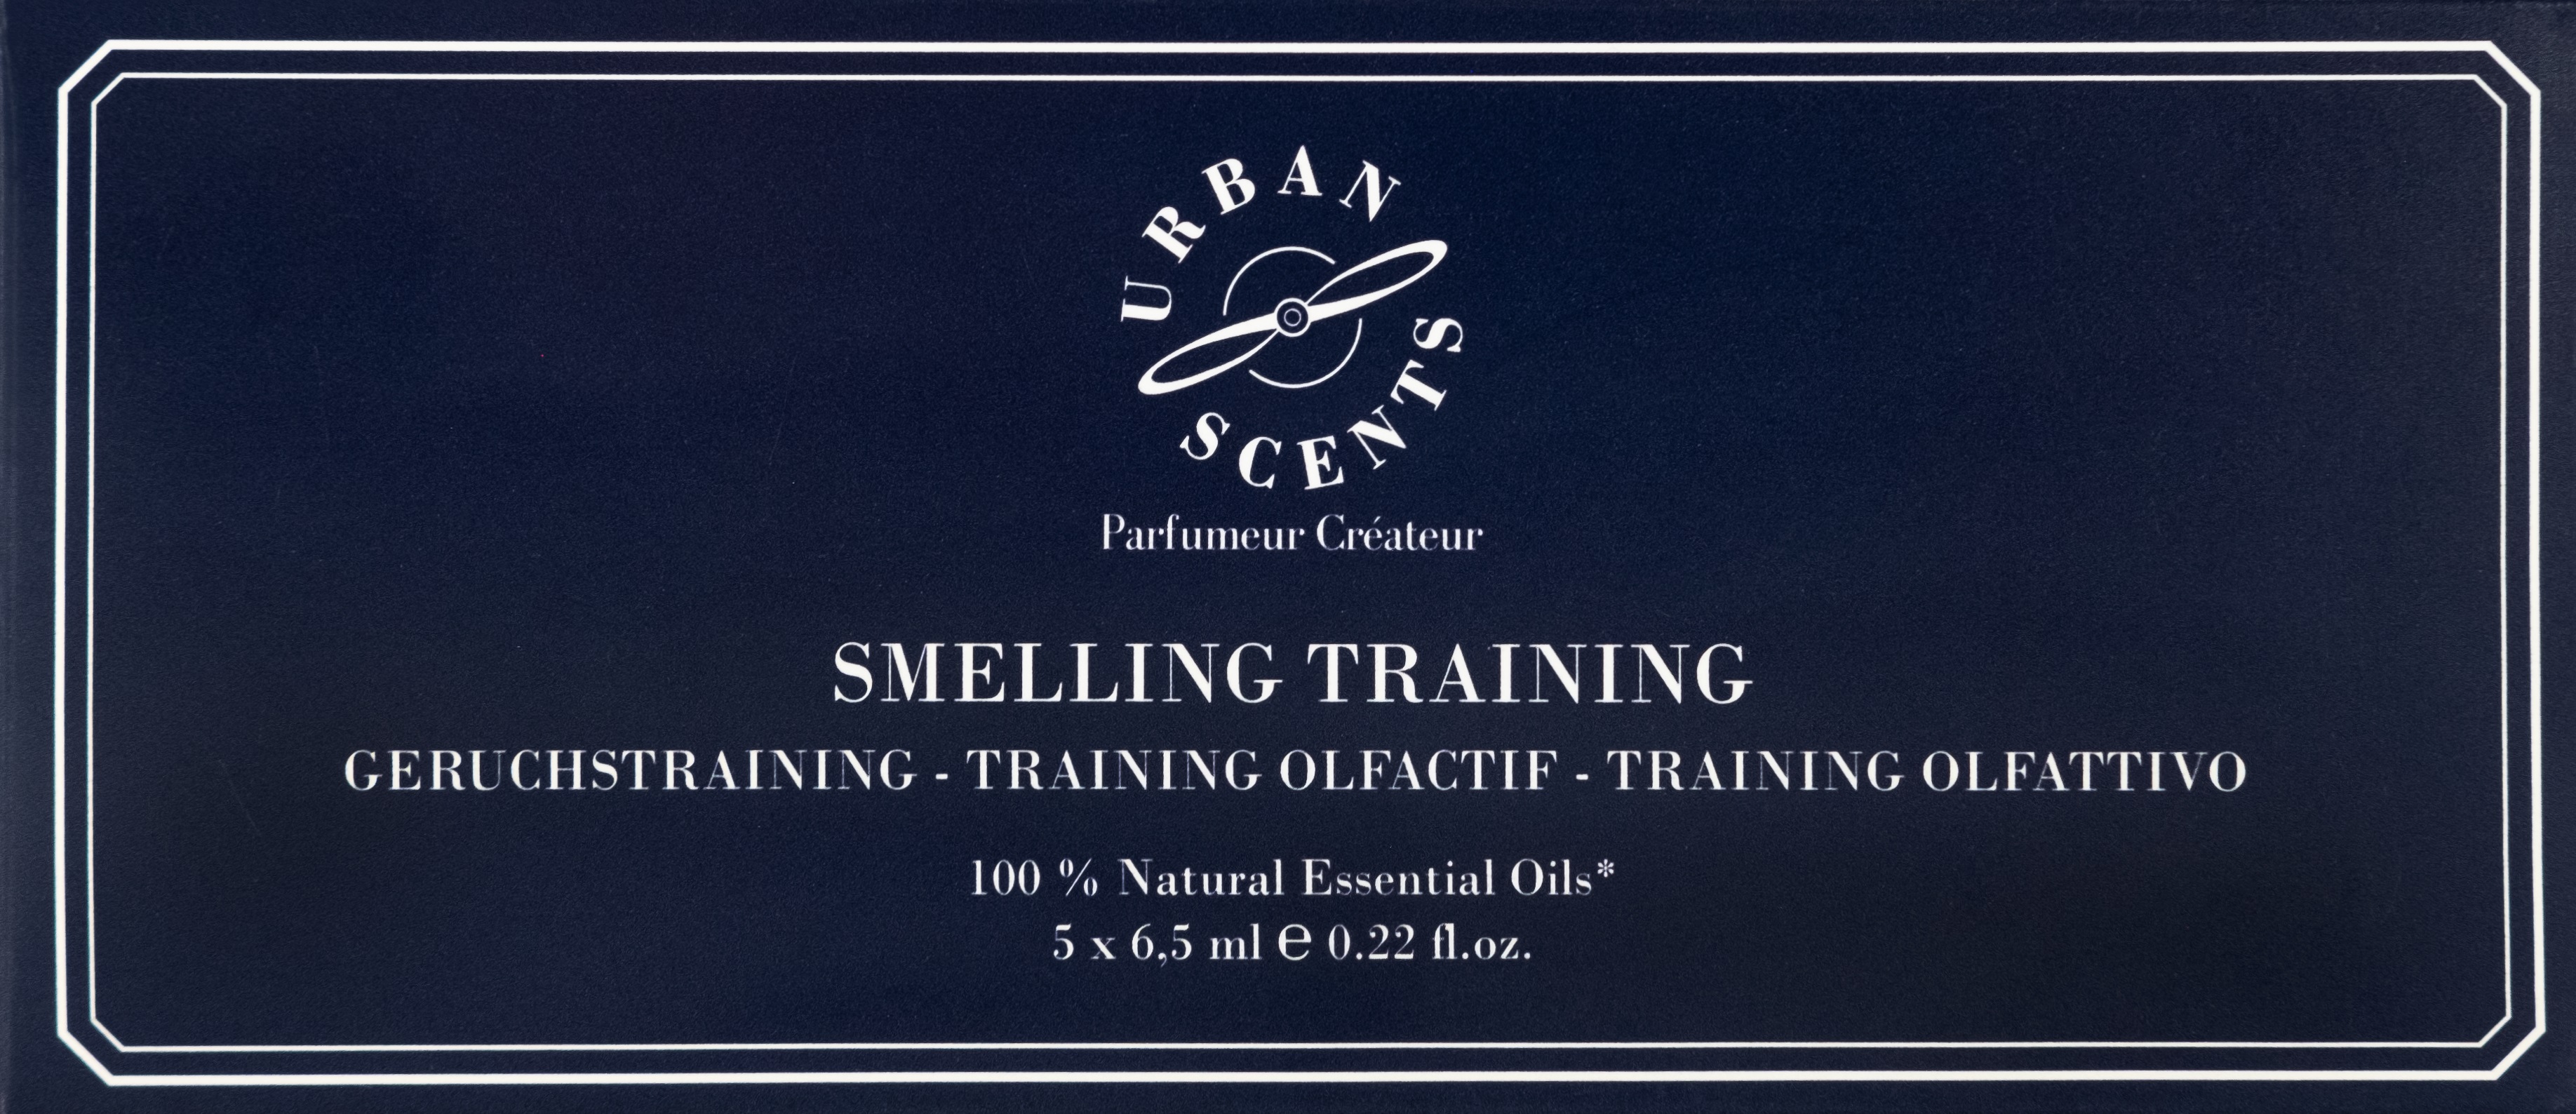 Smelling Training - Geruchstraining